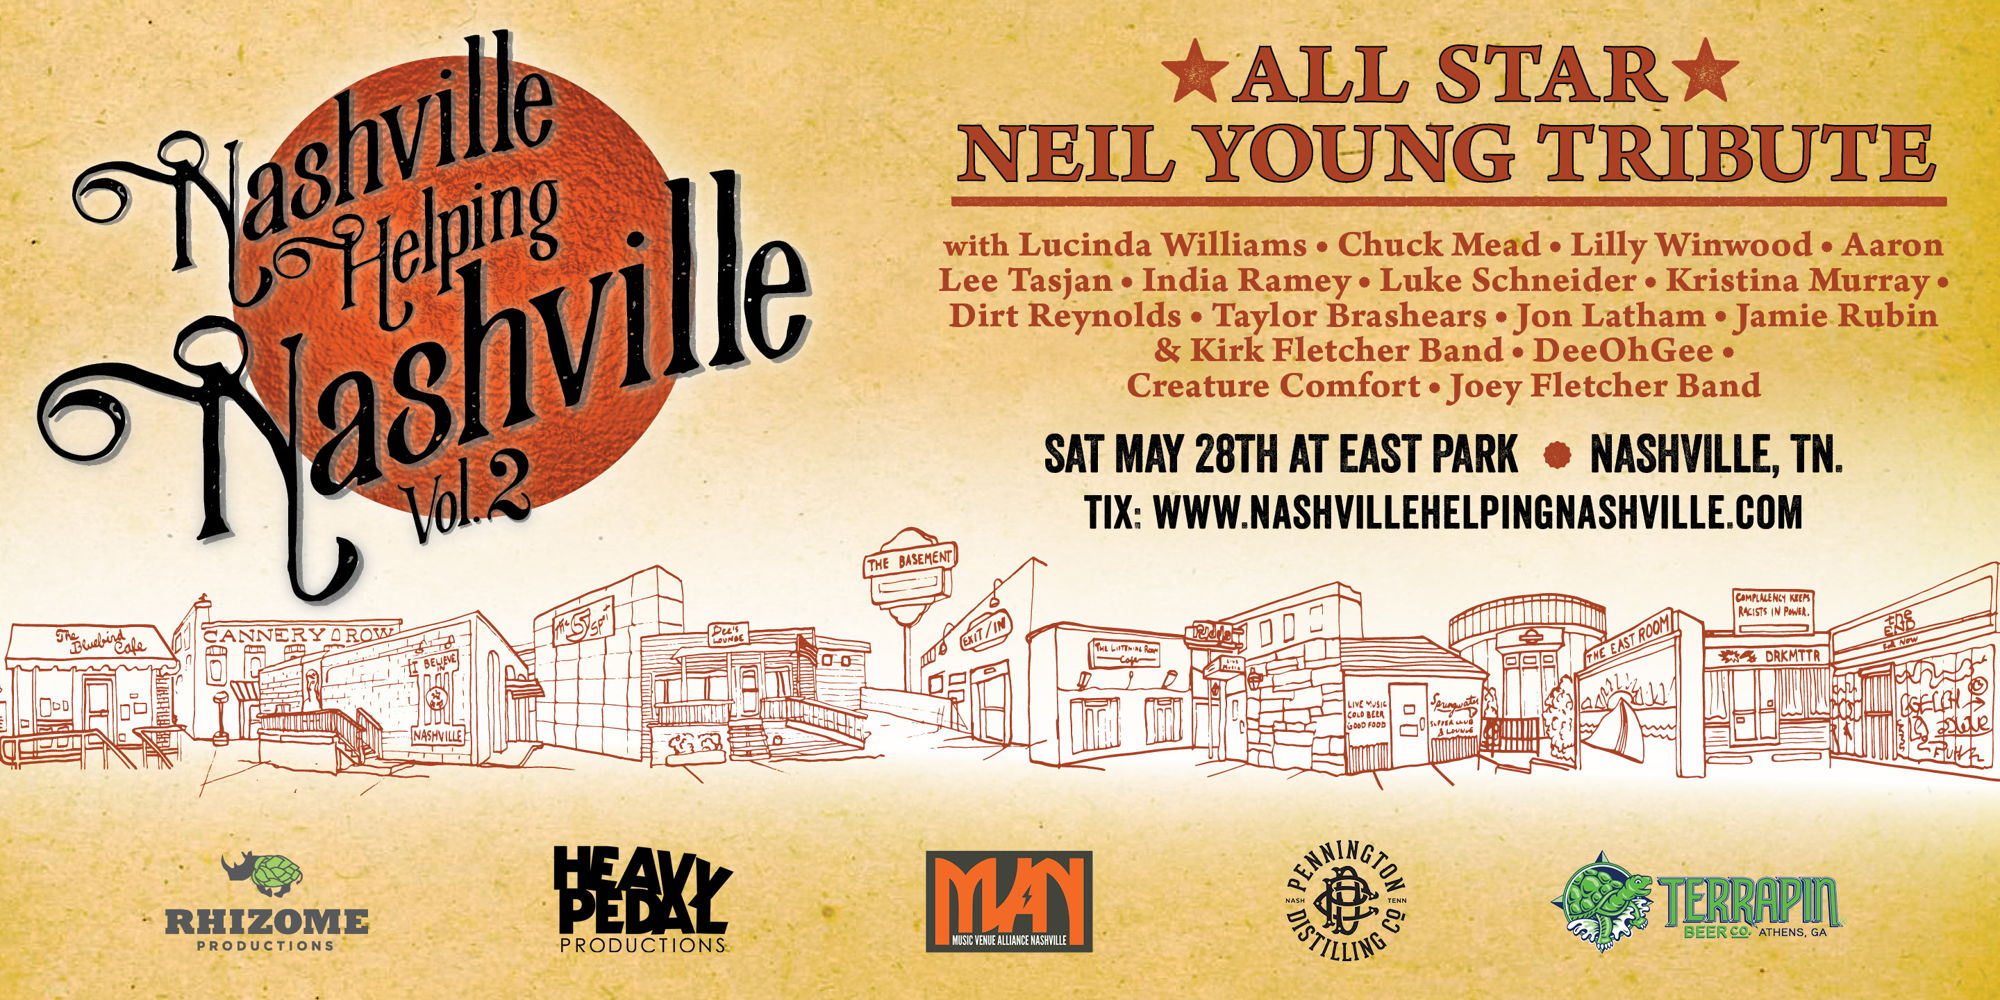 Nashville Helping Nashville 2: An All-Star Musical Benefit promotional image